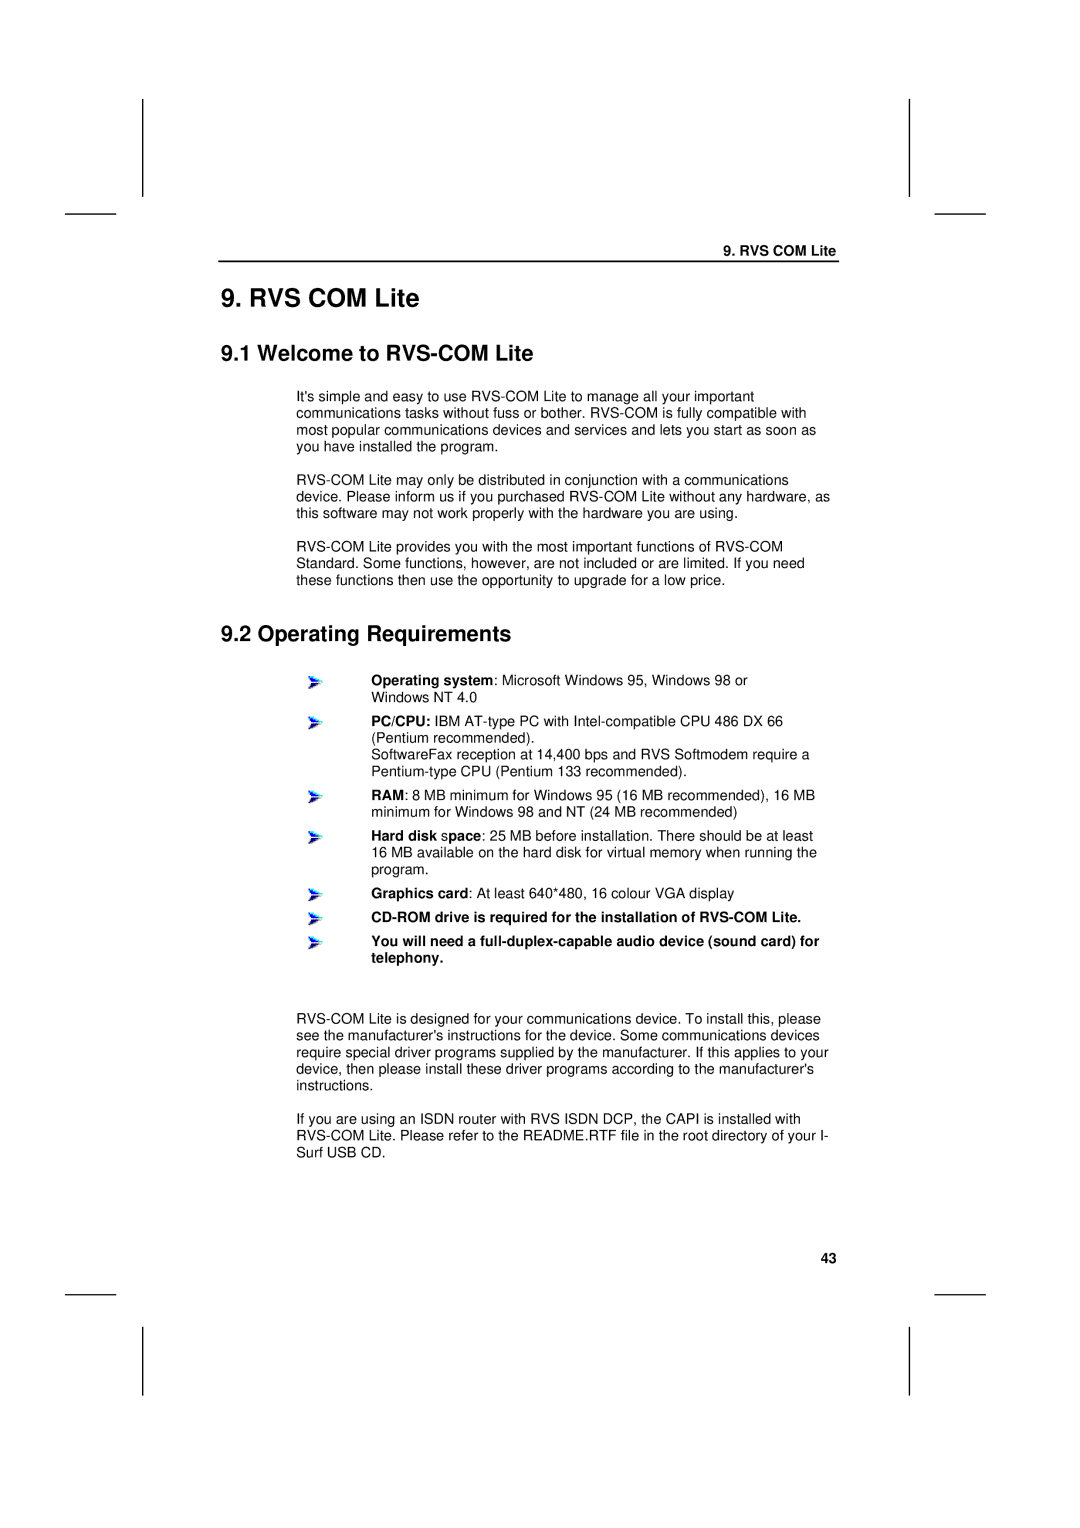 Siemens I-SURF manual RVS COM Lite, Welcome to RVS-COM Lite, Operating Requirements 